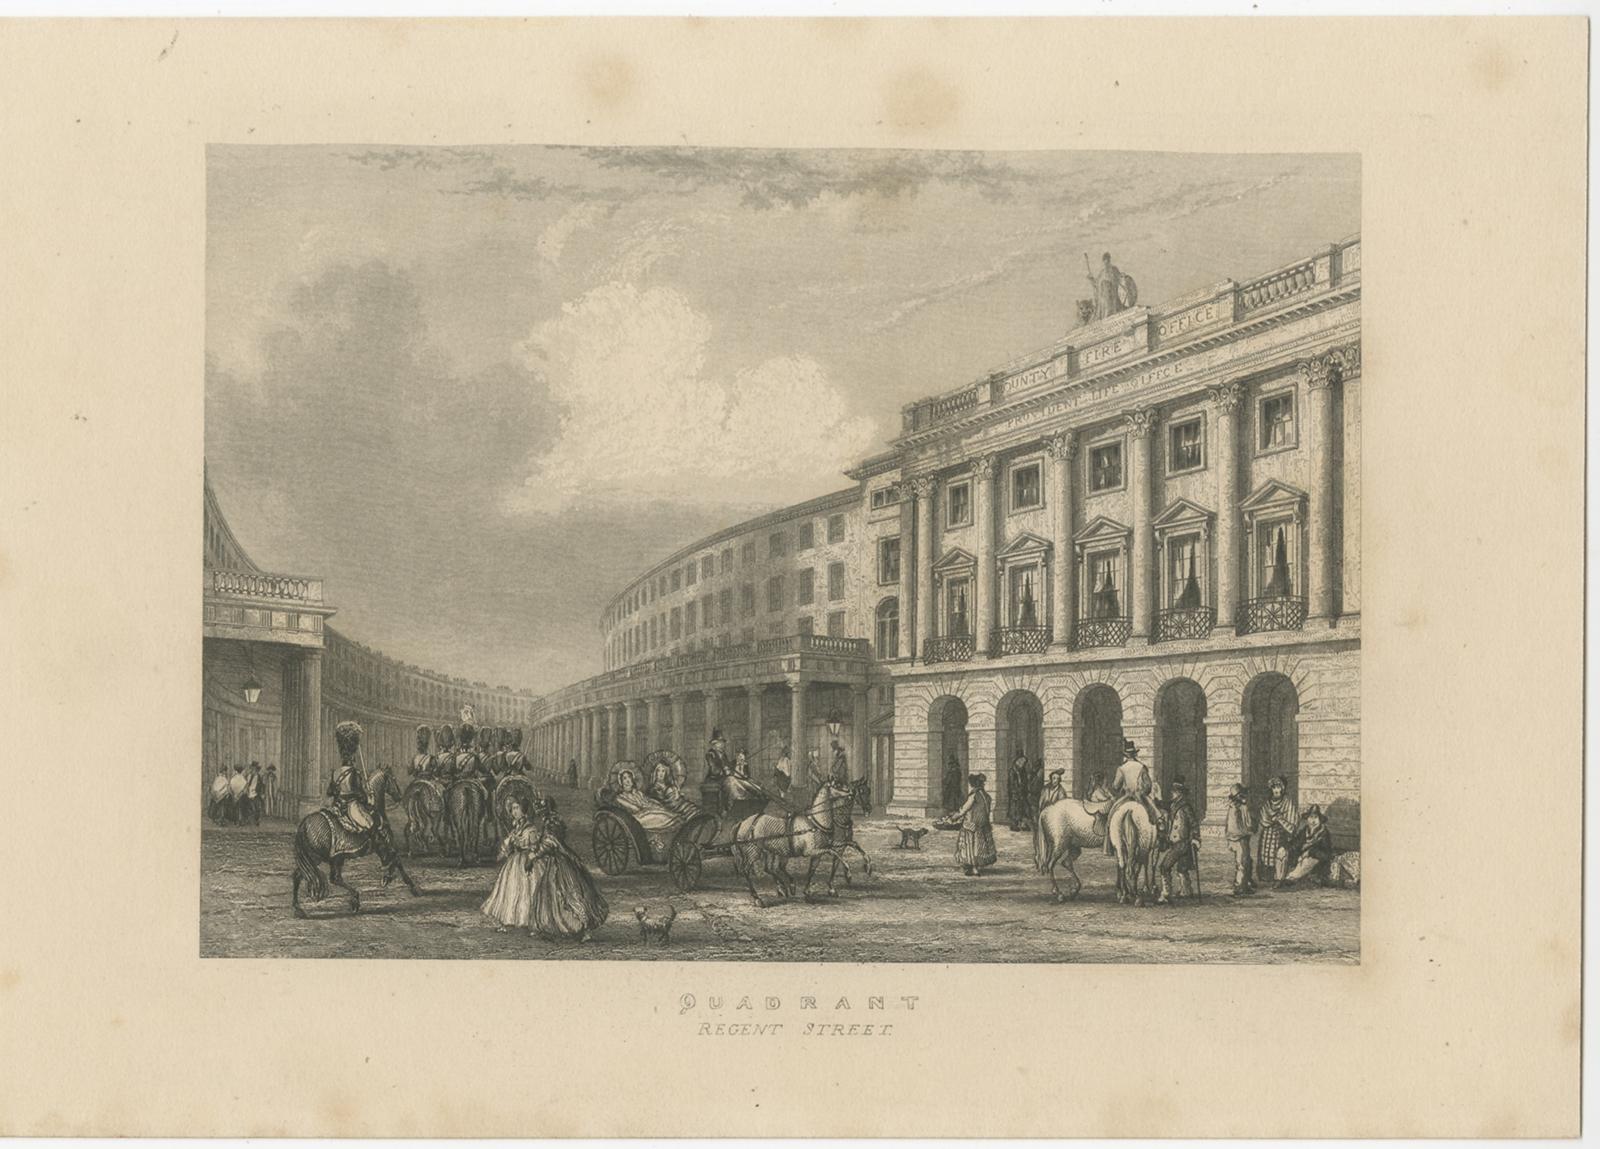 Paper Antique Print of the Quadrant of Regent Street, London, c.1840